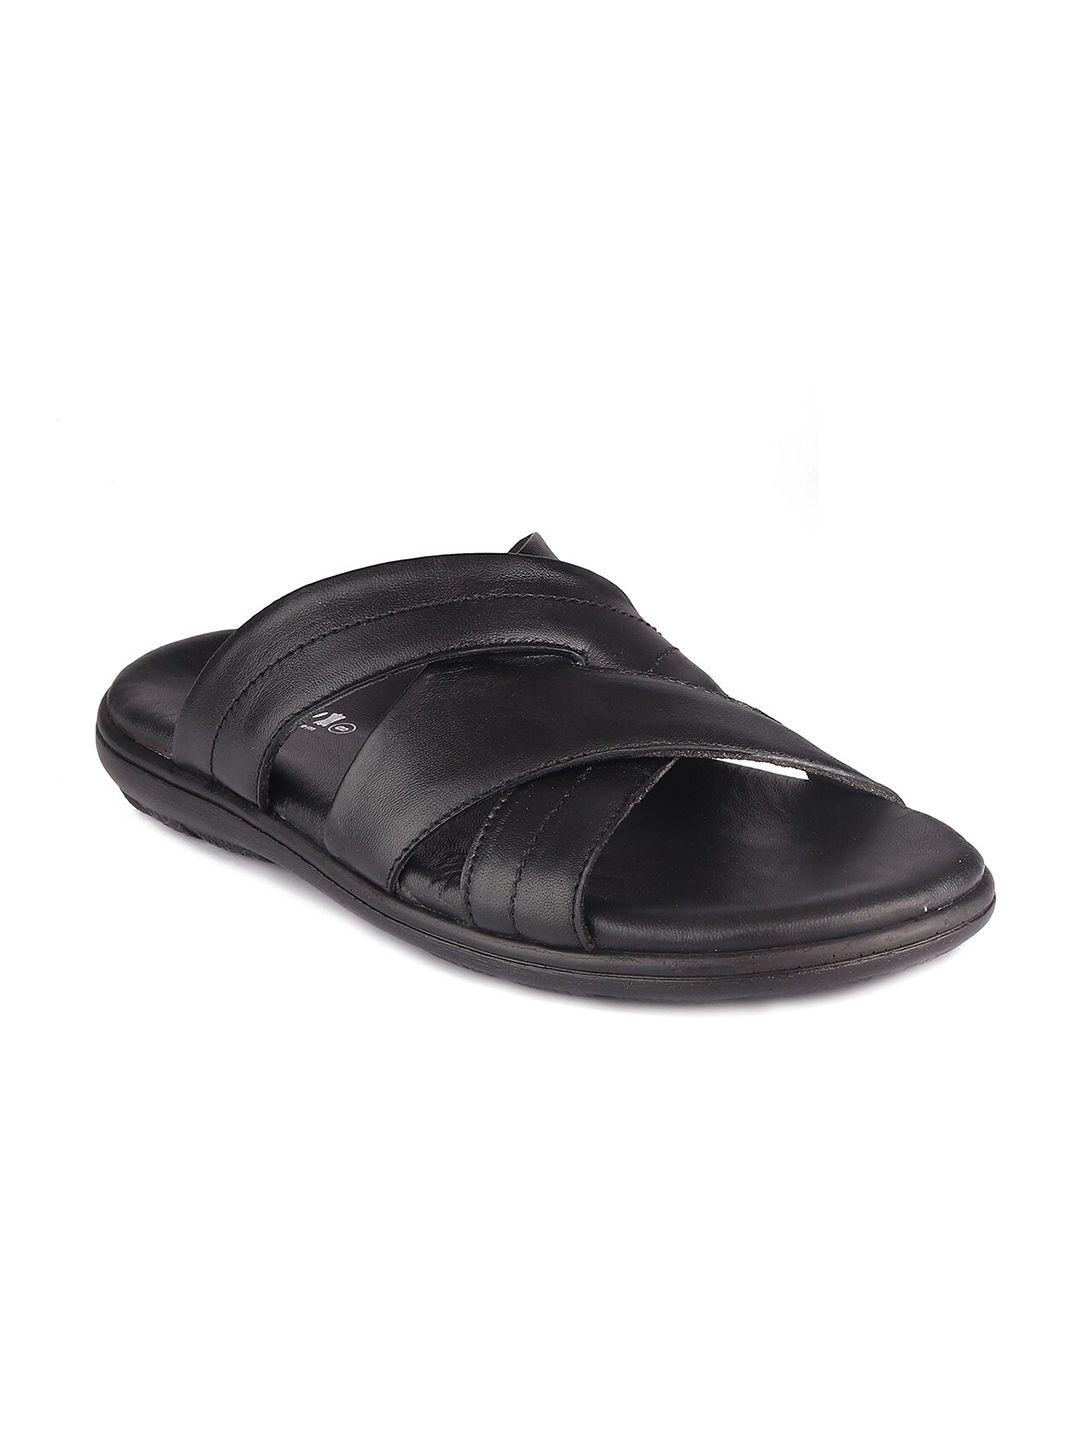 red-chief-men-black-leather-comfort-sandals